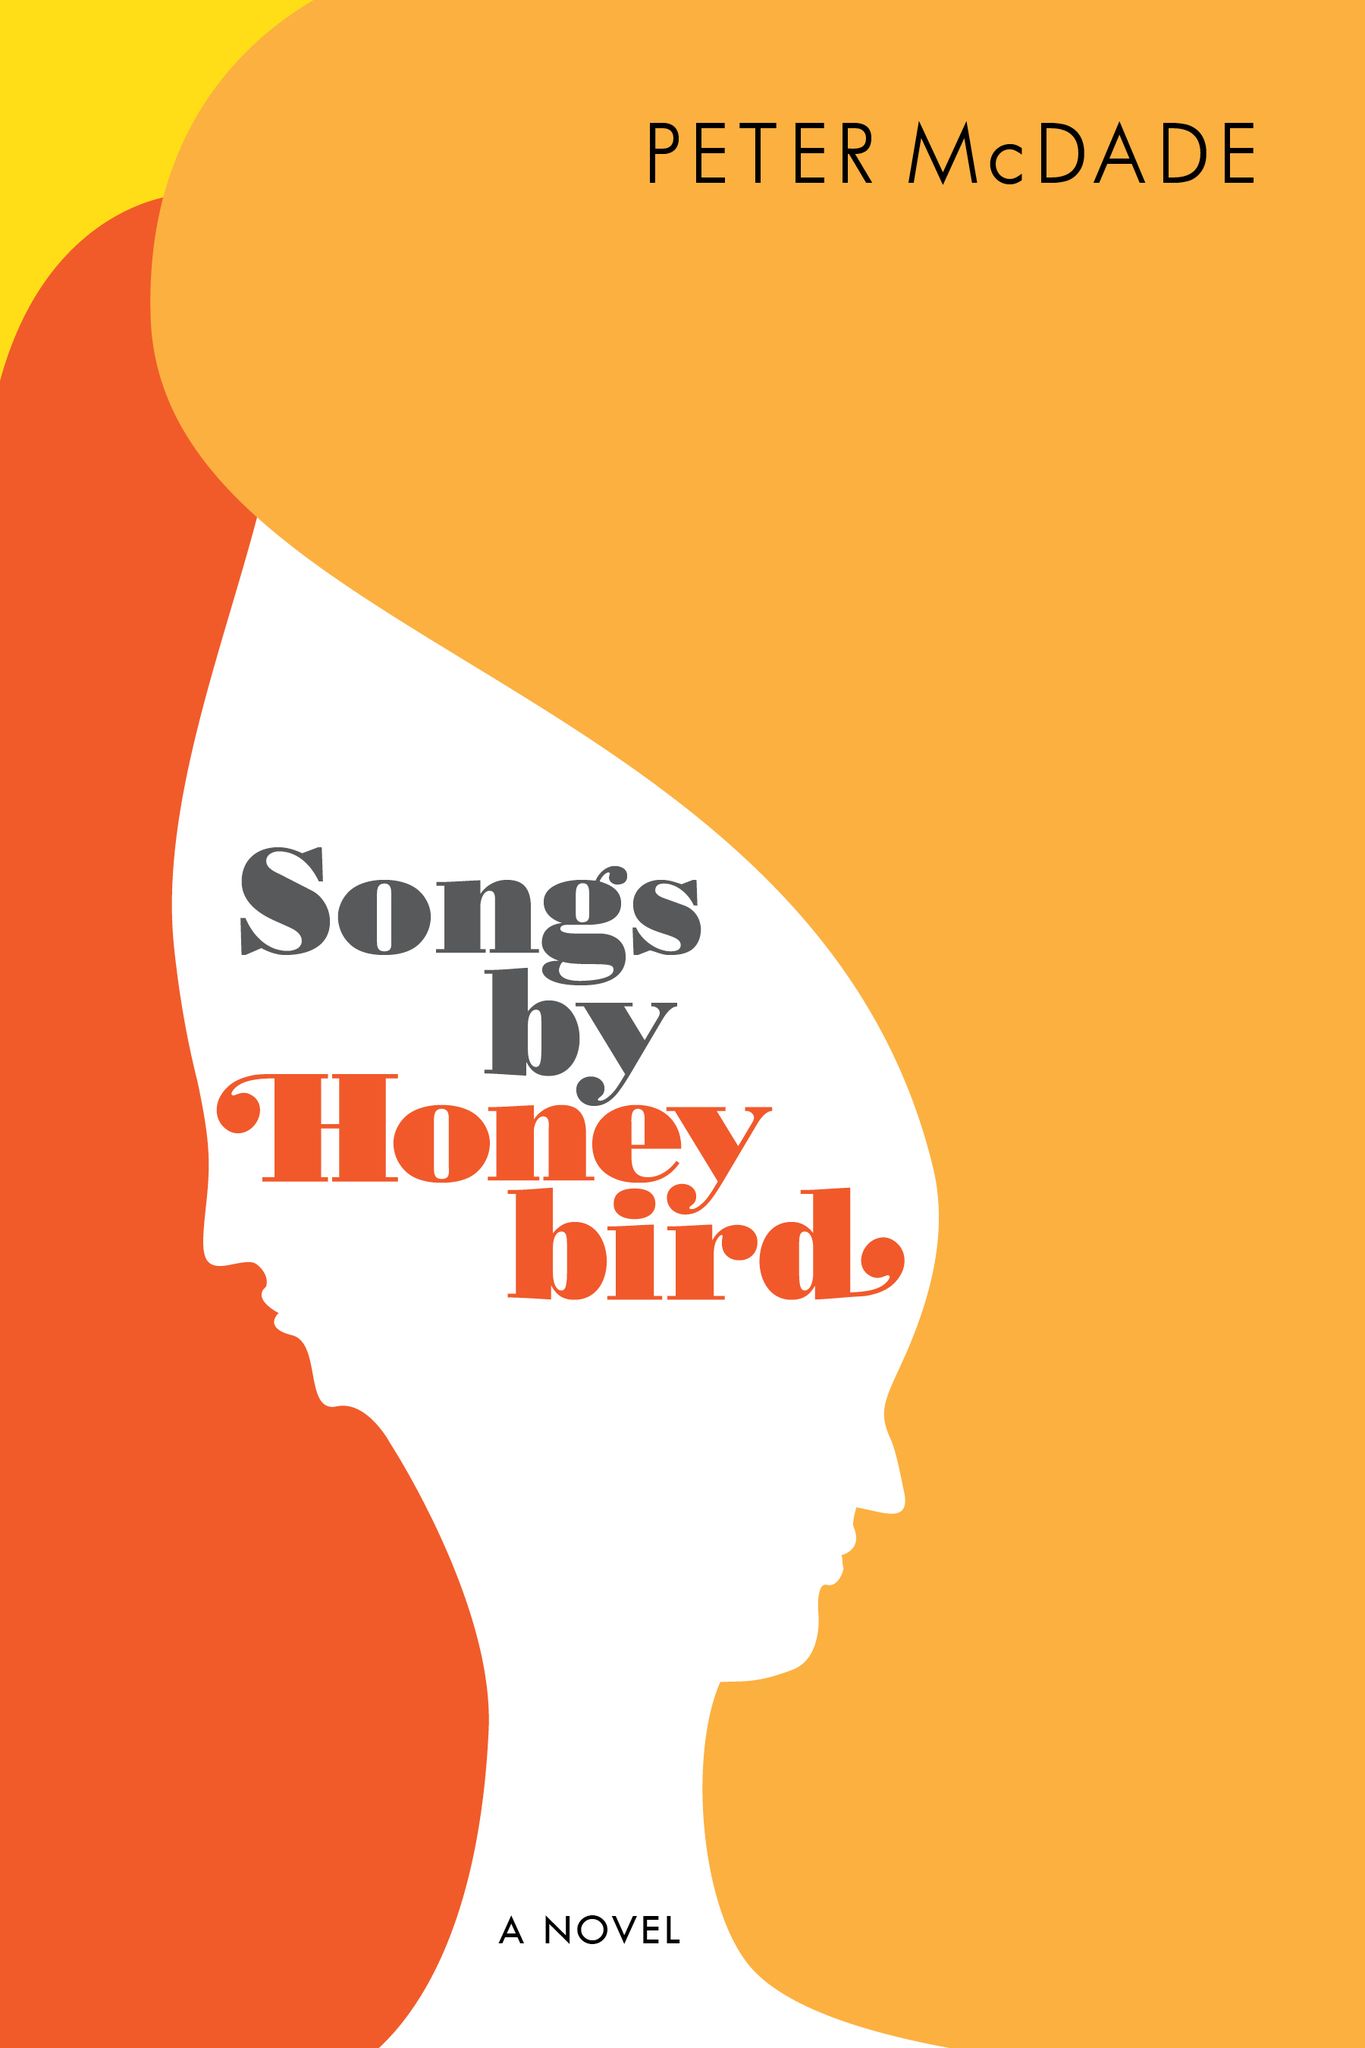 Songs by Honeybird by Peter McDade